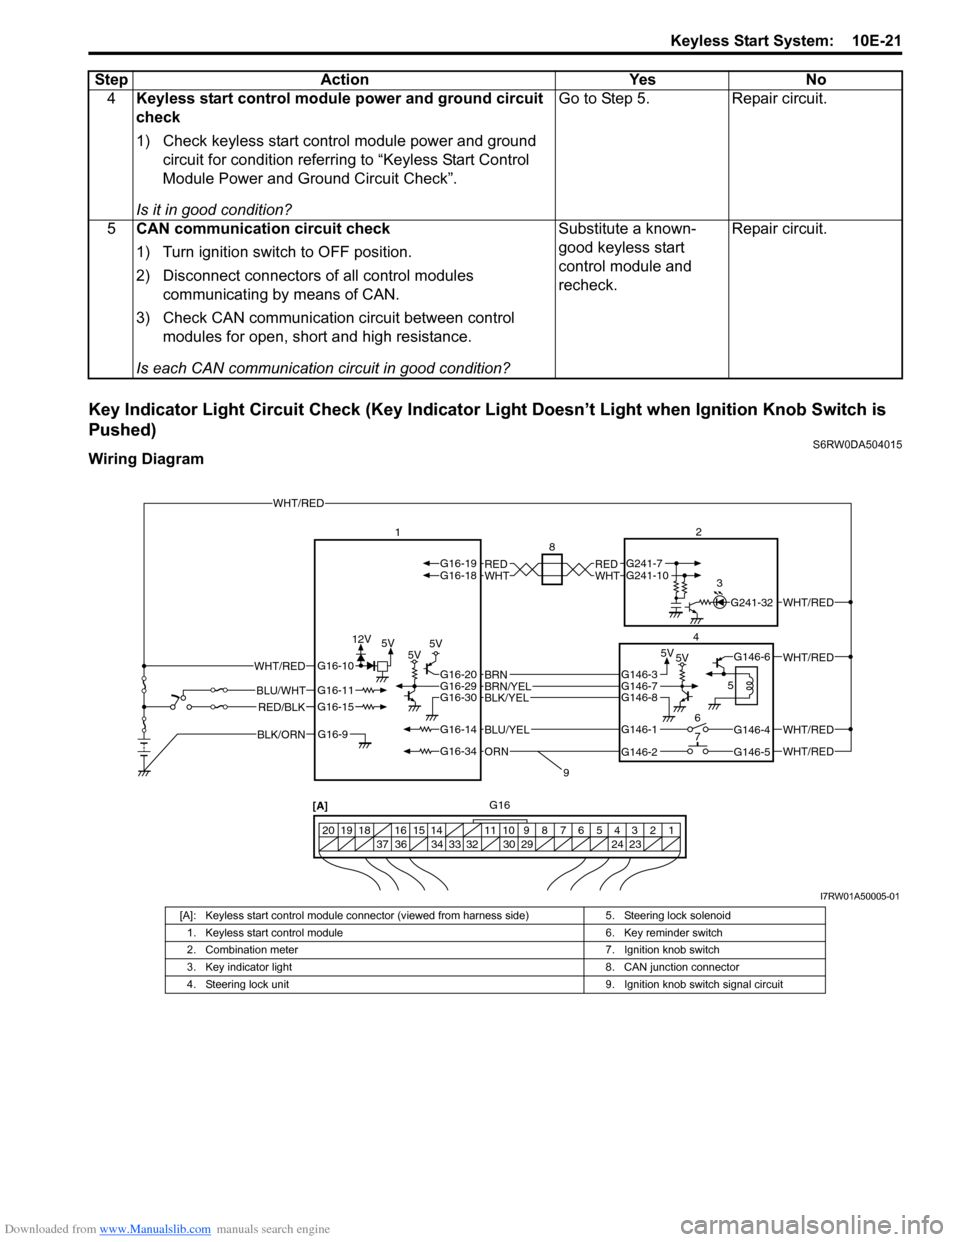 SUZUKI SX4 2006 1.G Service Workshop Manual Downloaded from www.Manualslib.com manuals search engine Keyless Start System:  10E-21
Key Indicator Light Circuit Check (Key Indicator Light Doesn’t Light when Ignition Knob Switch is 
Pushed)
S6RW